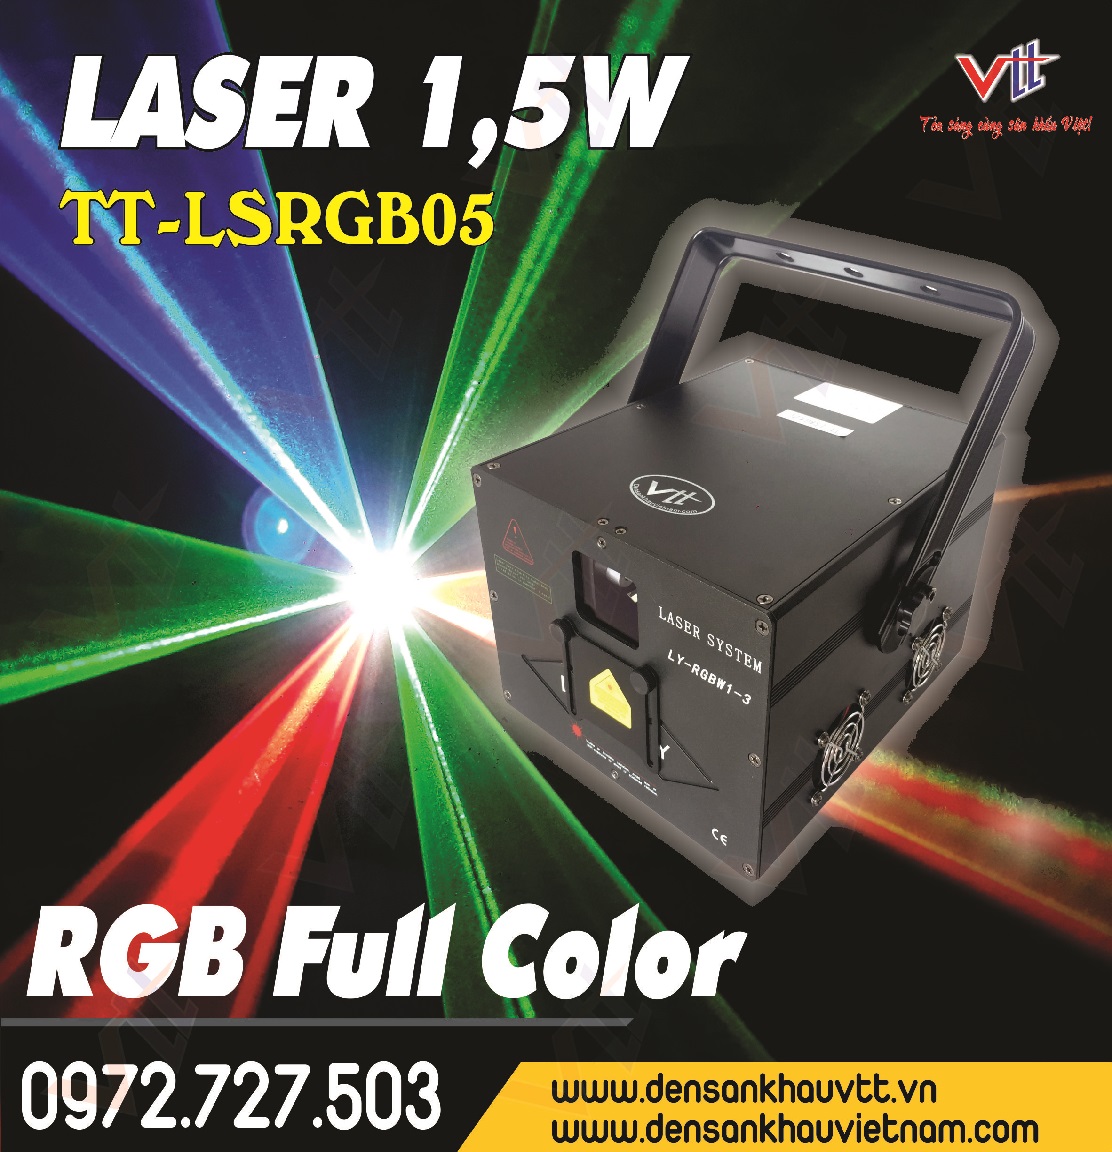 1,5W FULL COLOR LASER LIGHT TT-LSRGB05